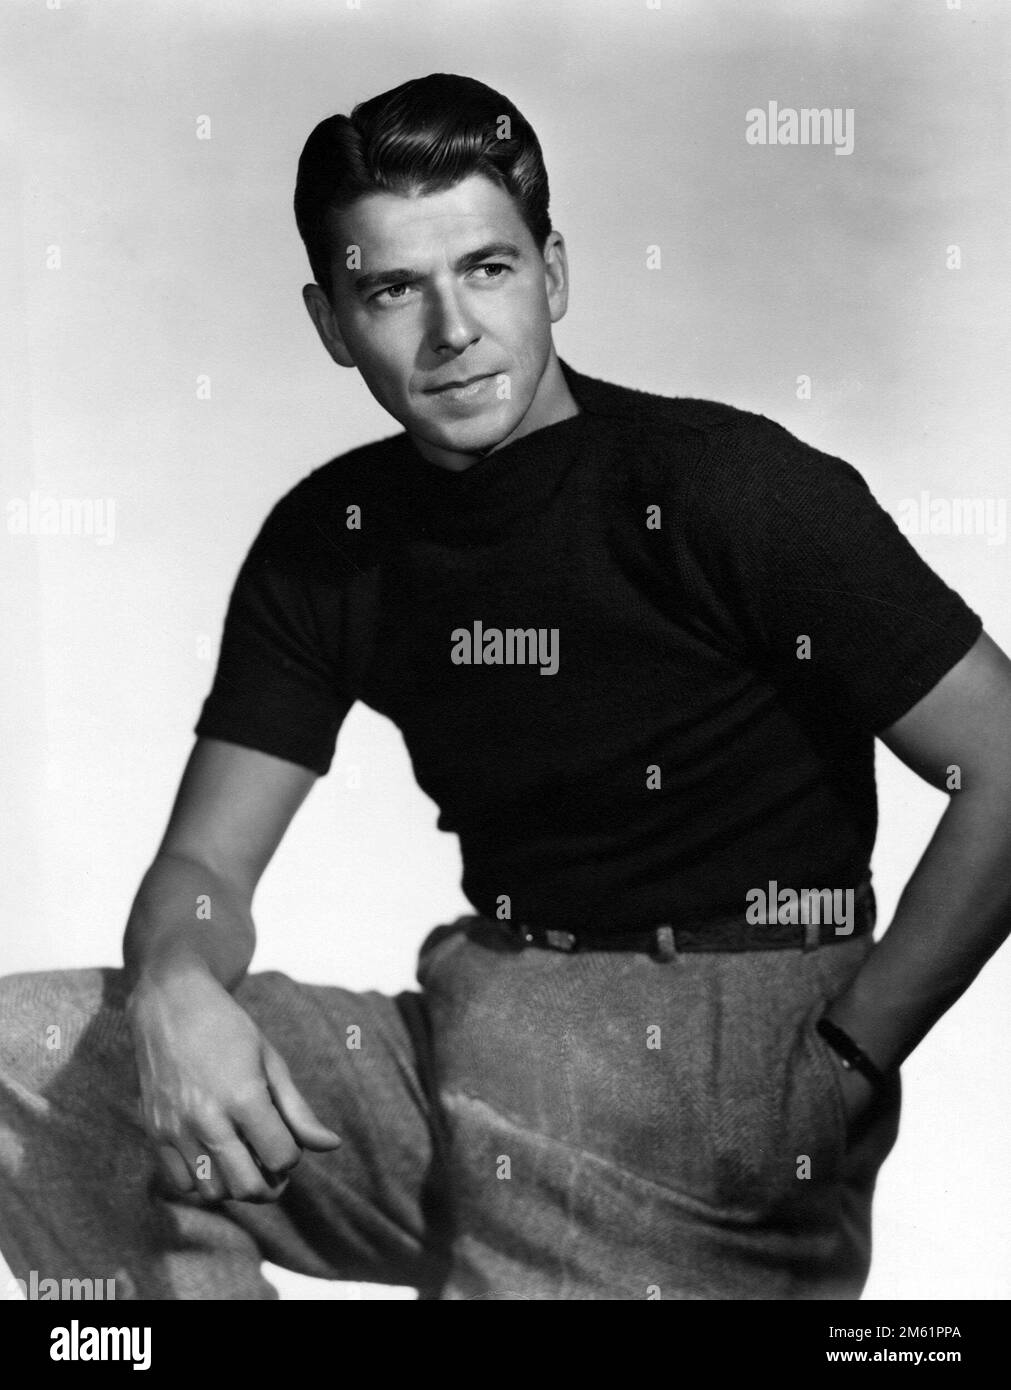 Ronald Reagan publicity photo 1940s Stock Photo